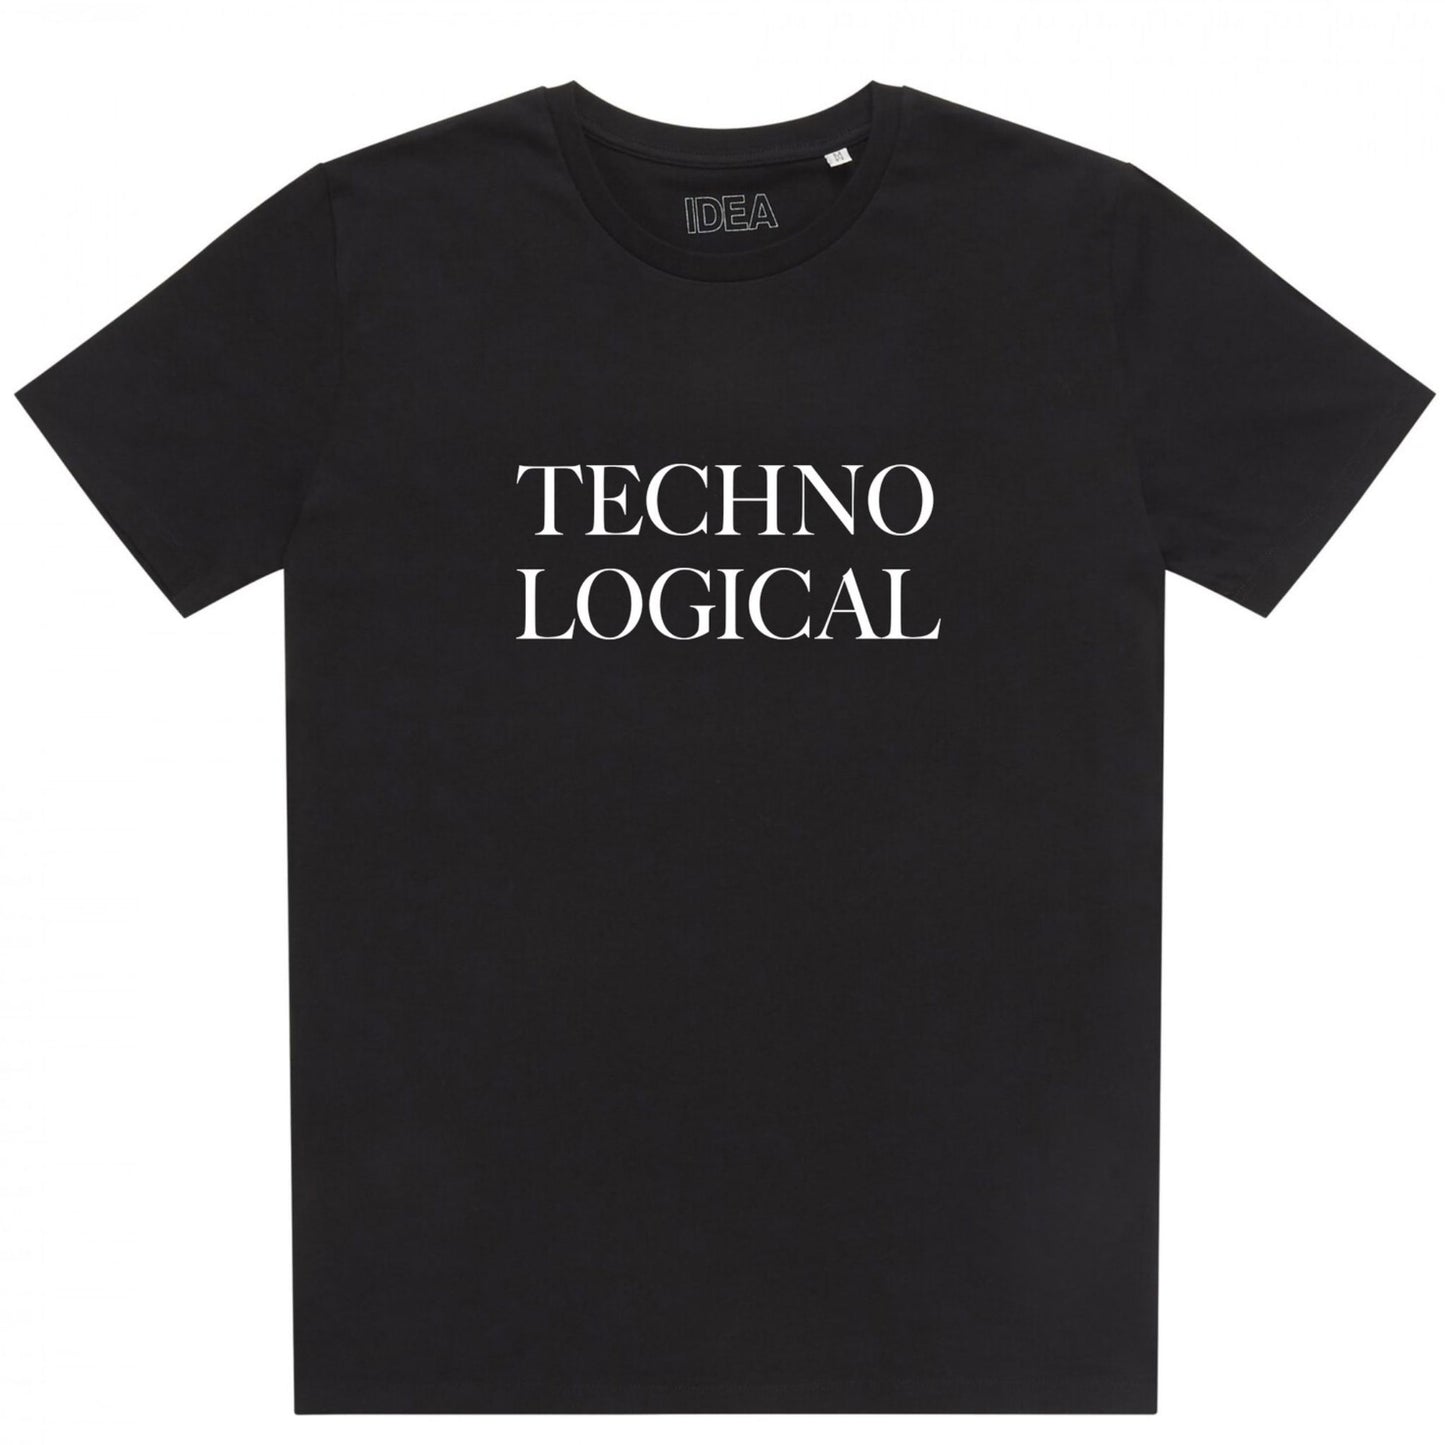 IDEA - Techno Logical T-Shirt